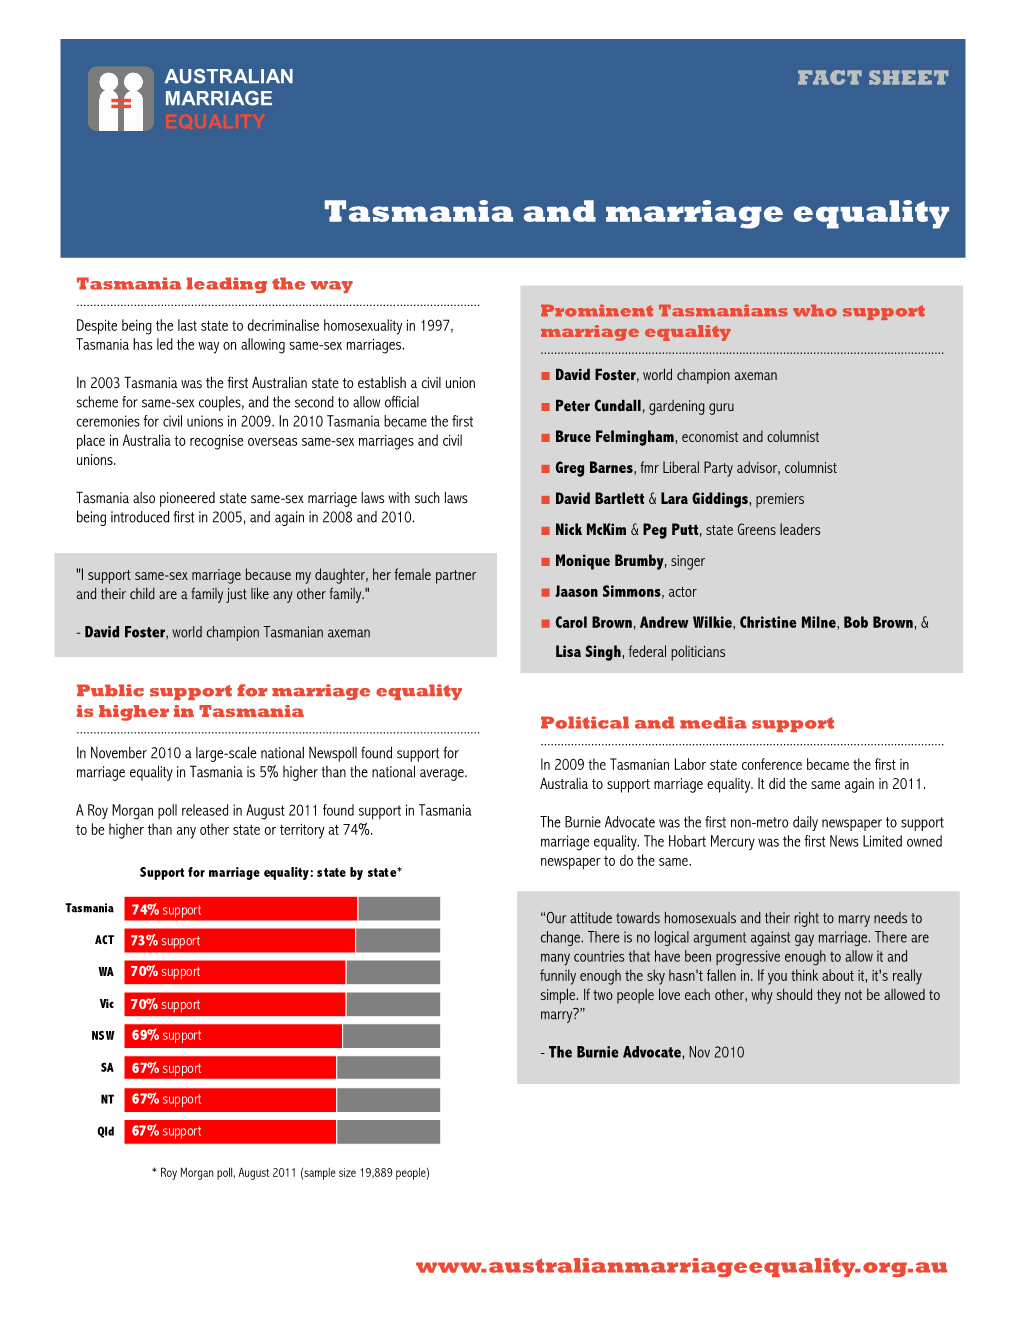 Tasmania and Marriage Equality